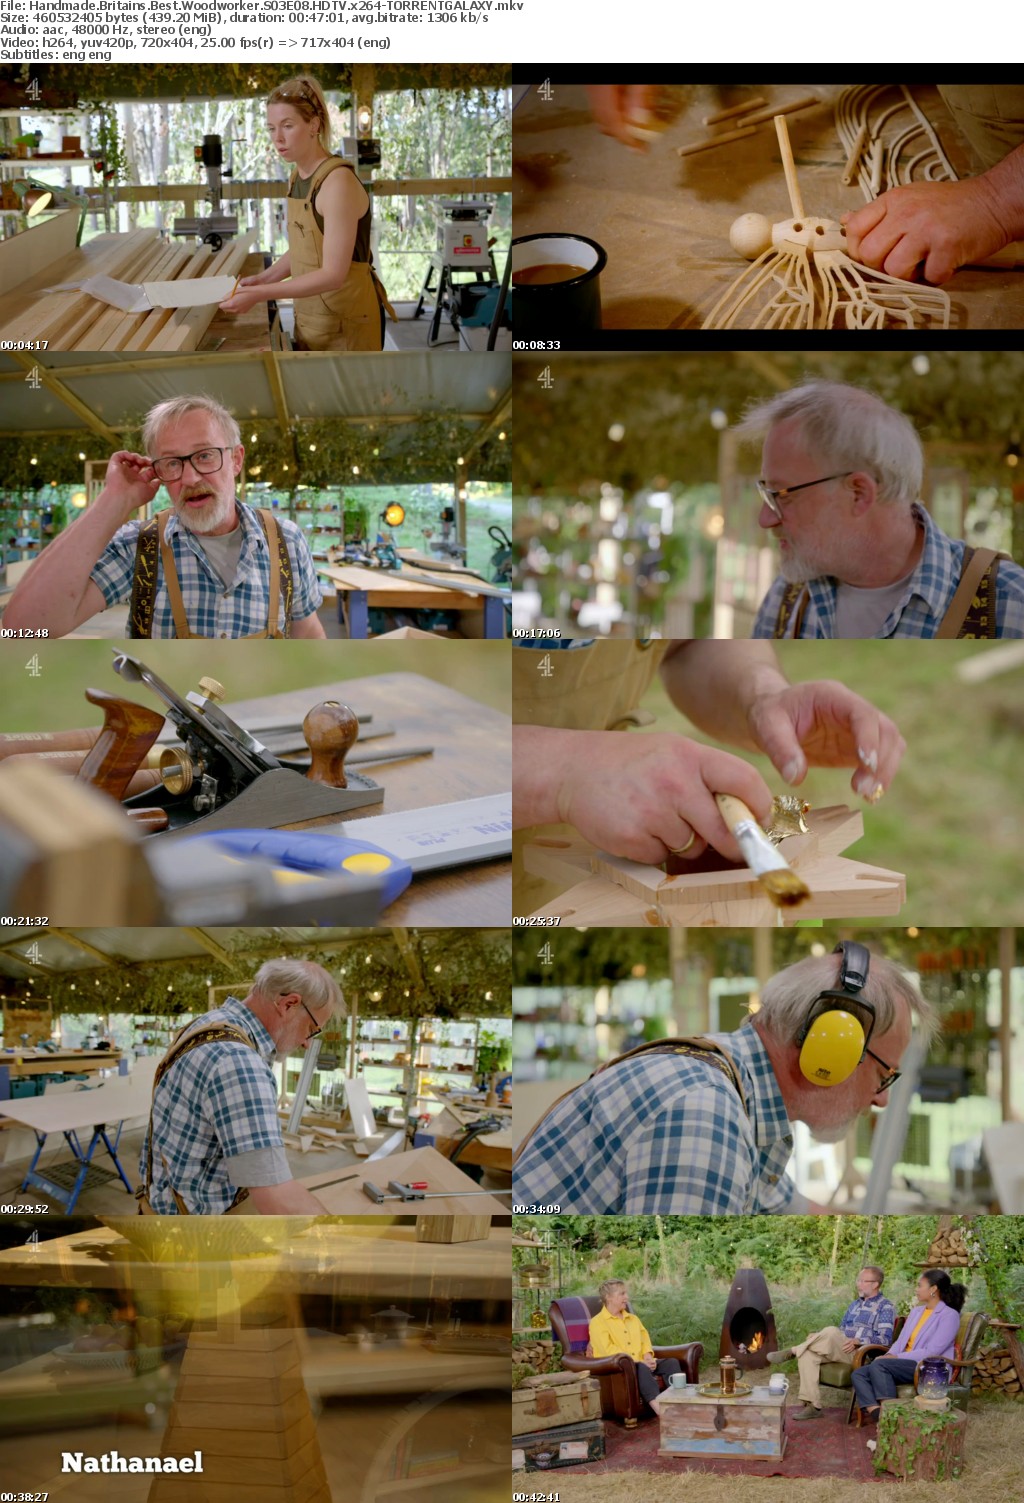 Handmade Britains Best Woodworker S03E08 HDTV x264-GALAXY